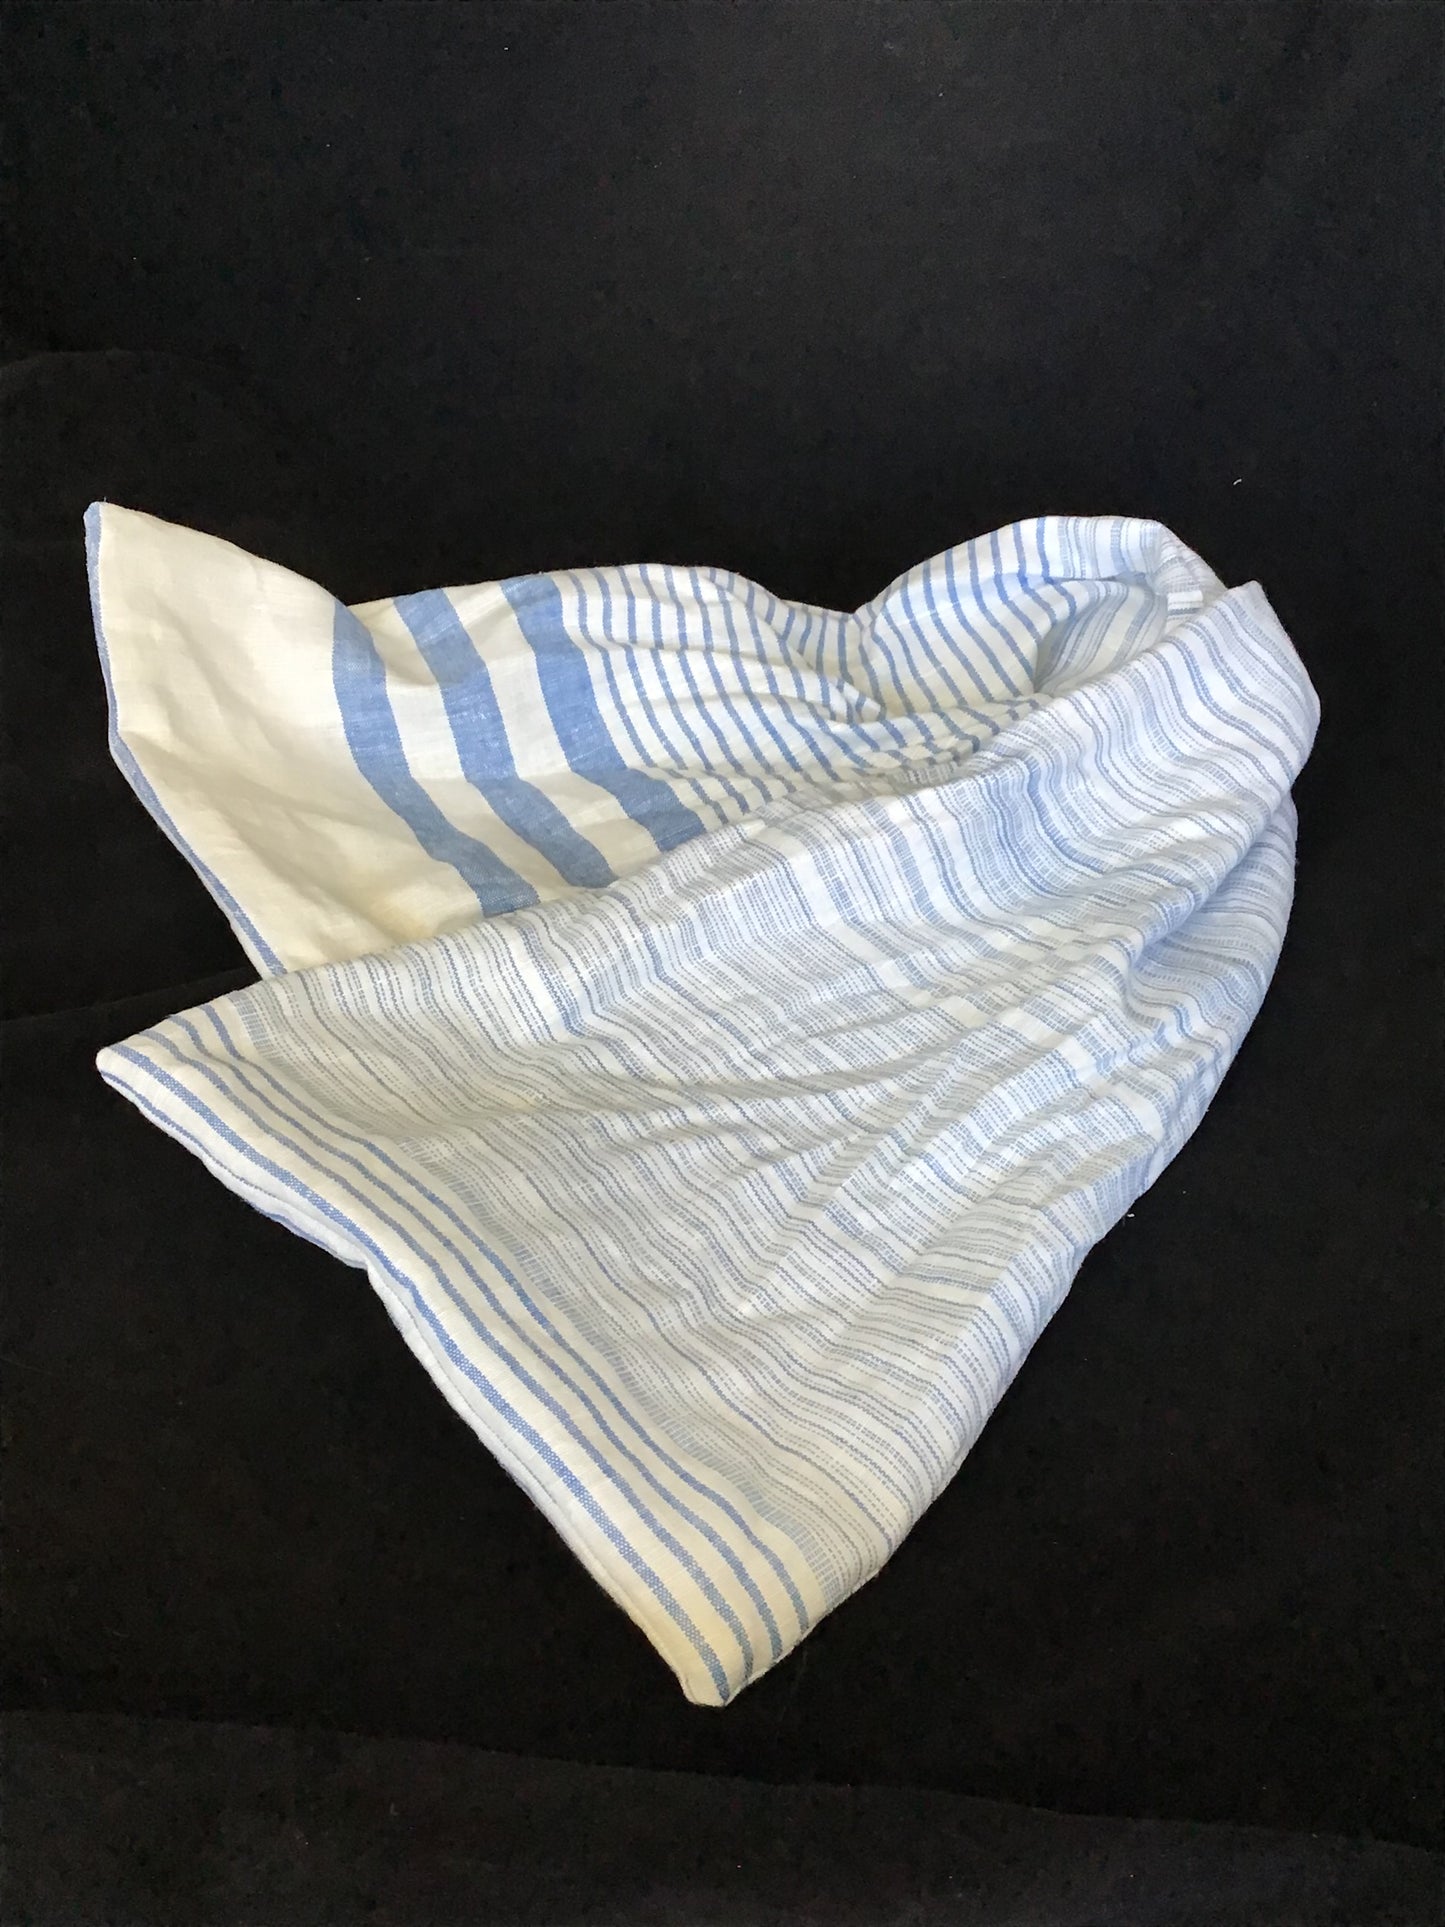 Linen Twisturban® in blue and white stripe